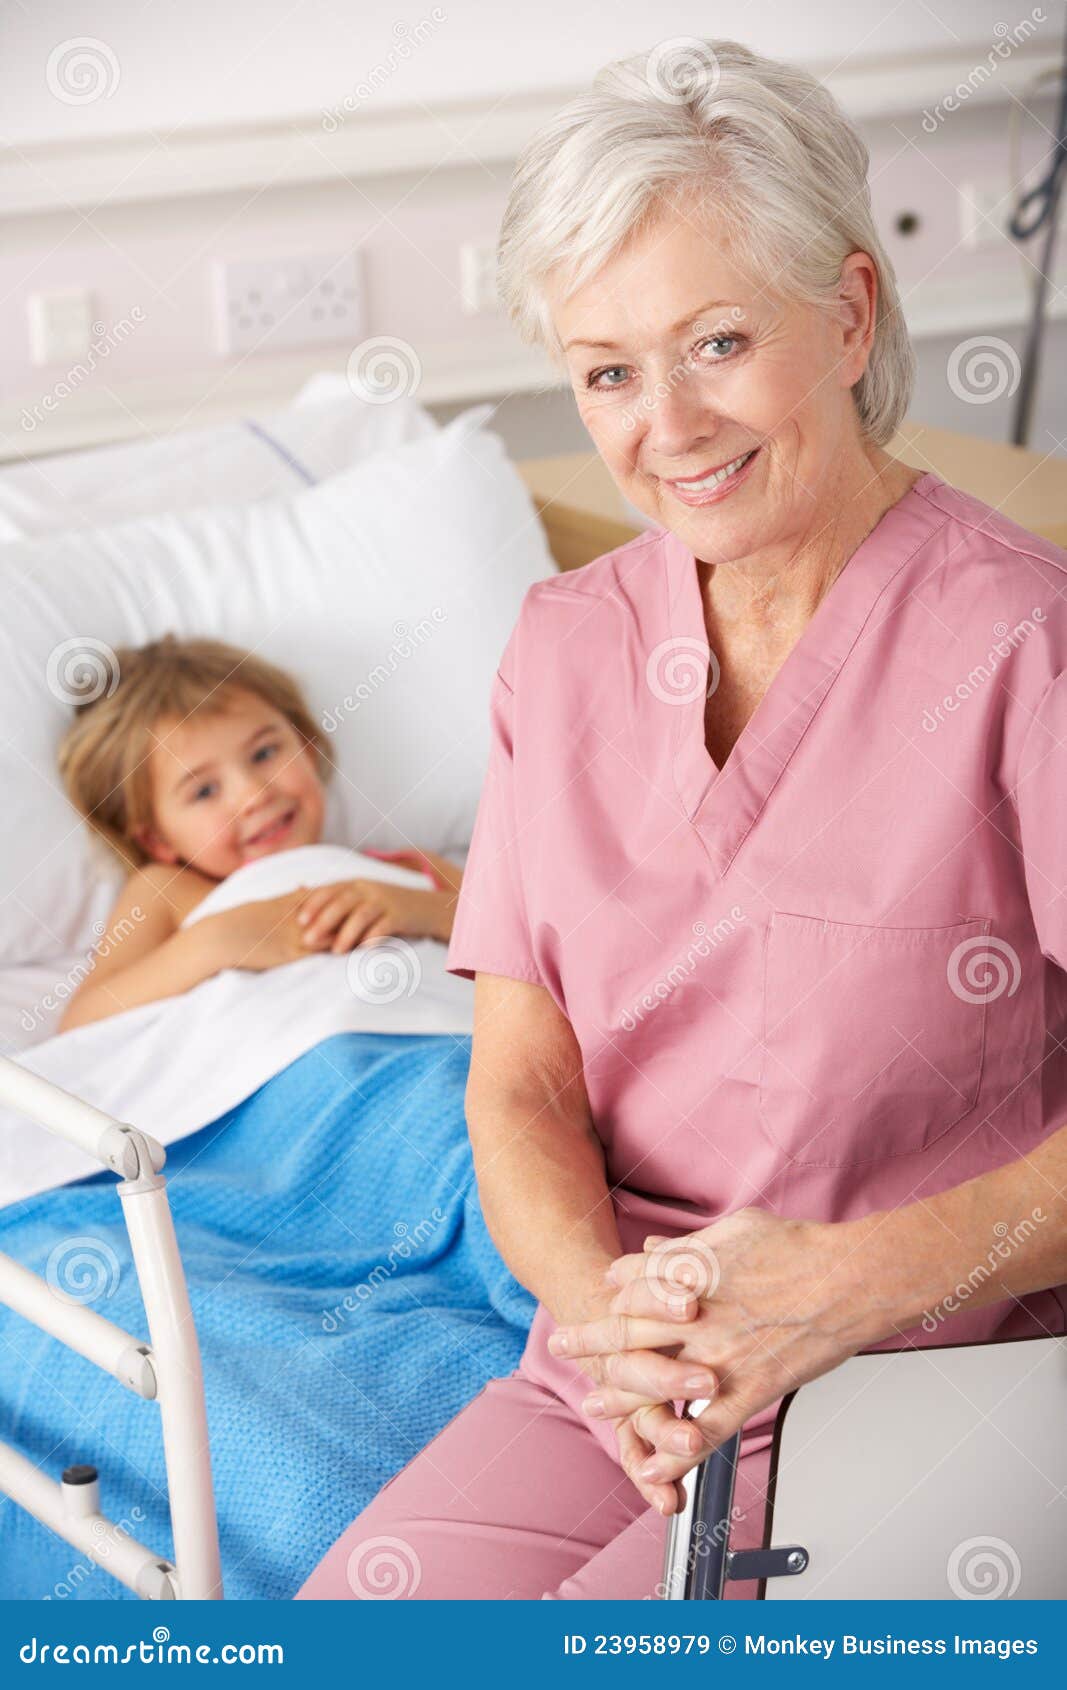 elderly nurse in usa pediatrics with child patient